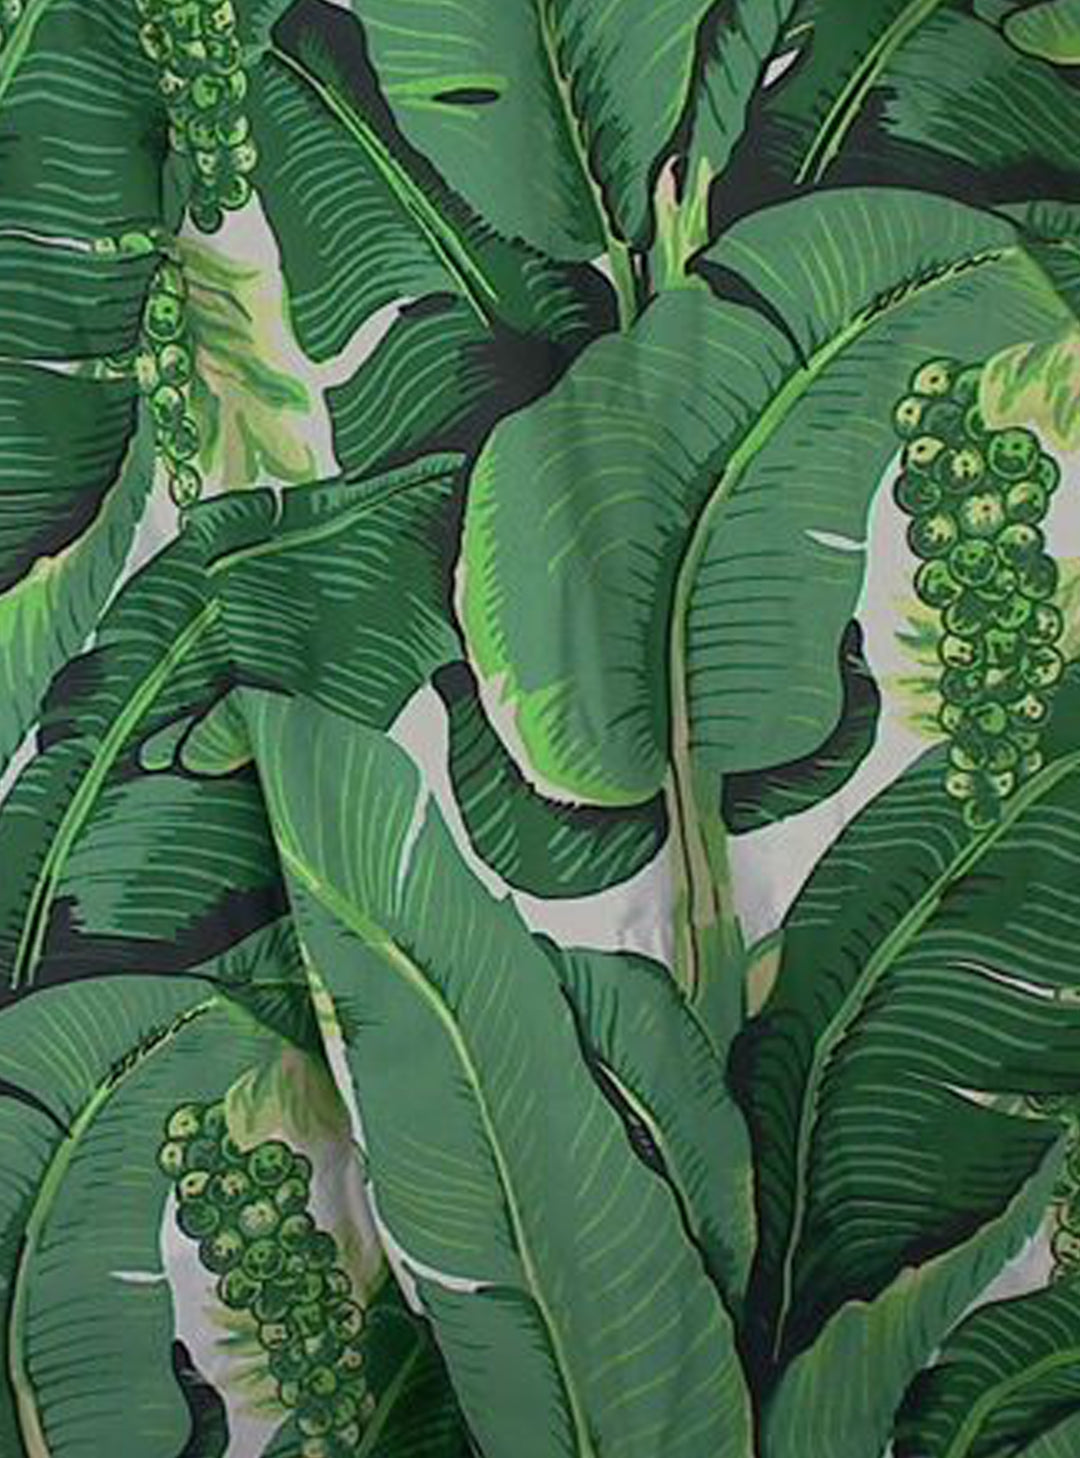 Brazilians Banana Leaves Wallpaper, Tropical Print with Bananas and Grape Vines Print